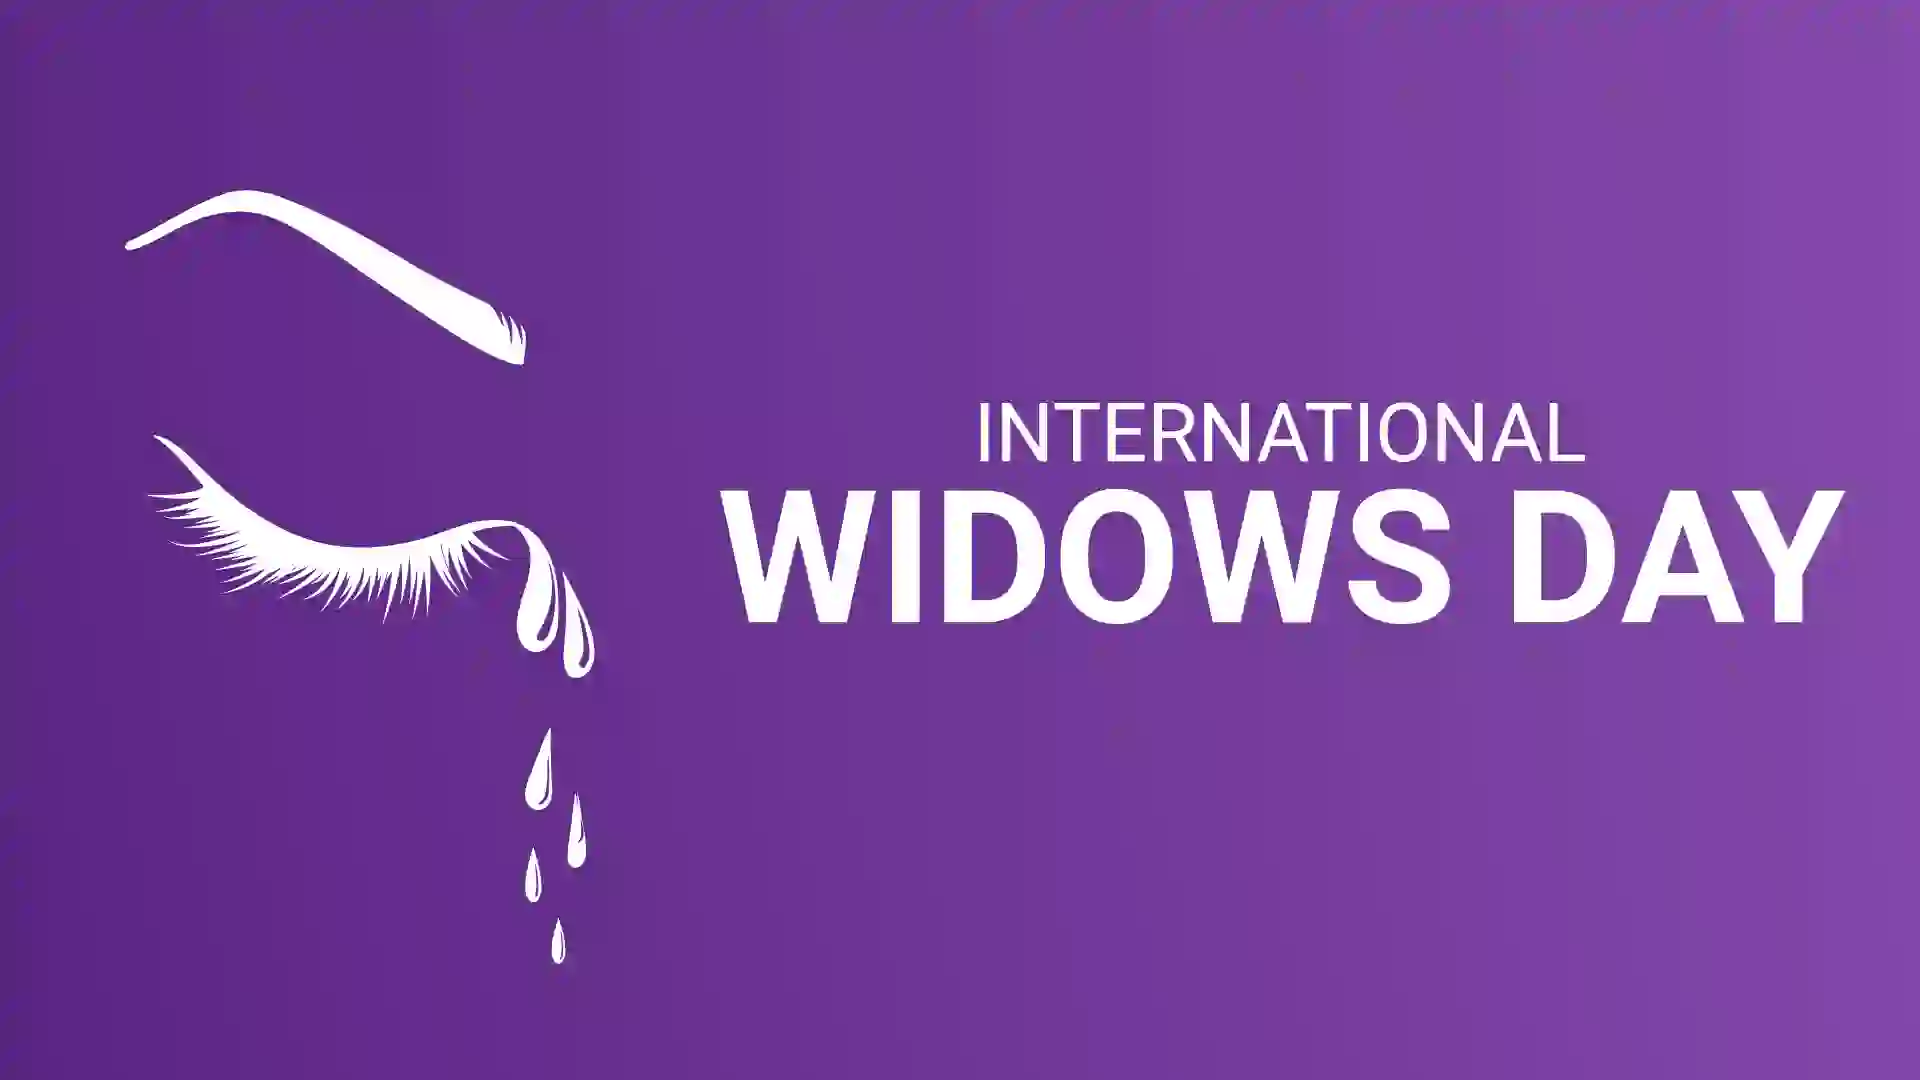 International Widows Day This Post Design By The Revolution Deshbhakt Hindustani